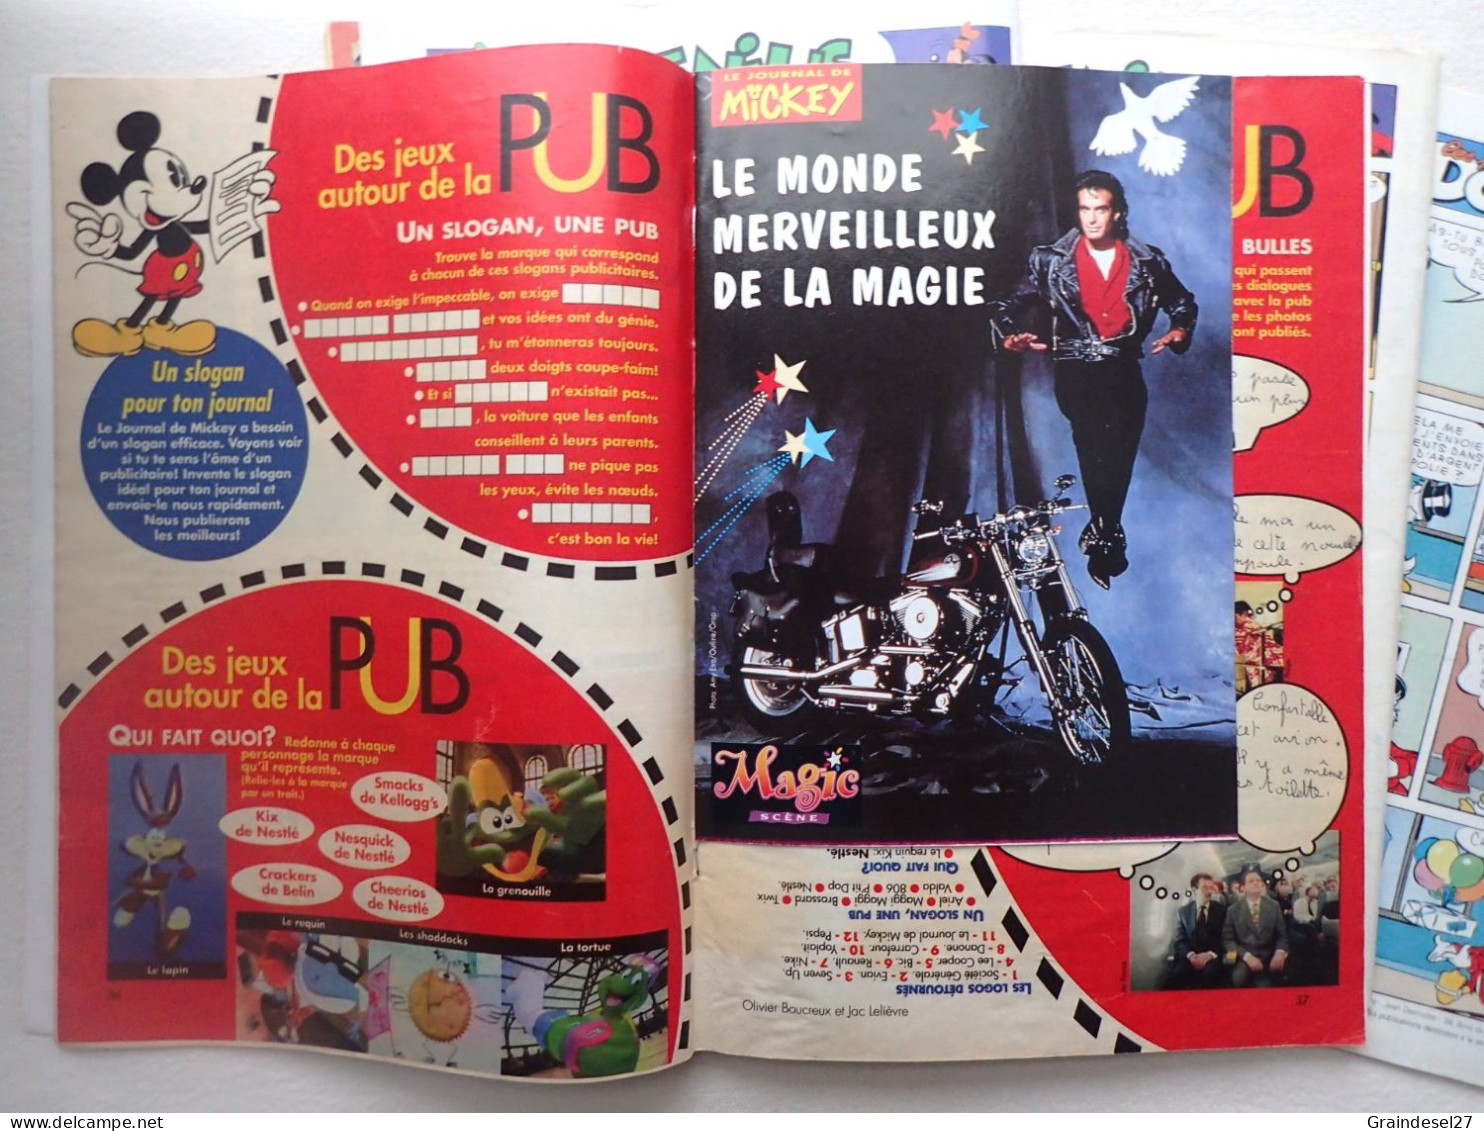 Le Journal De Mickey Lot De 2 Magazines De 1996 N° 2282 Et 2316 - Journal De Mickey